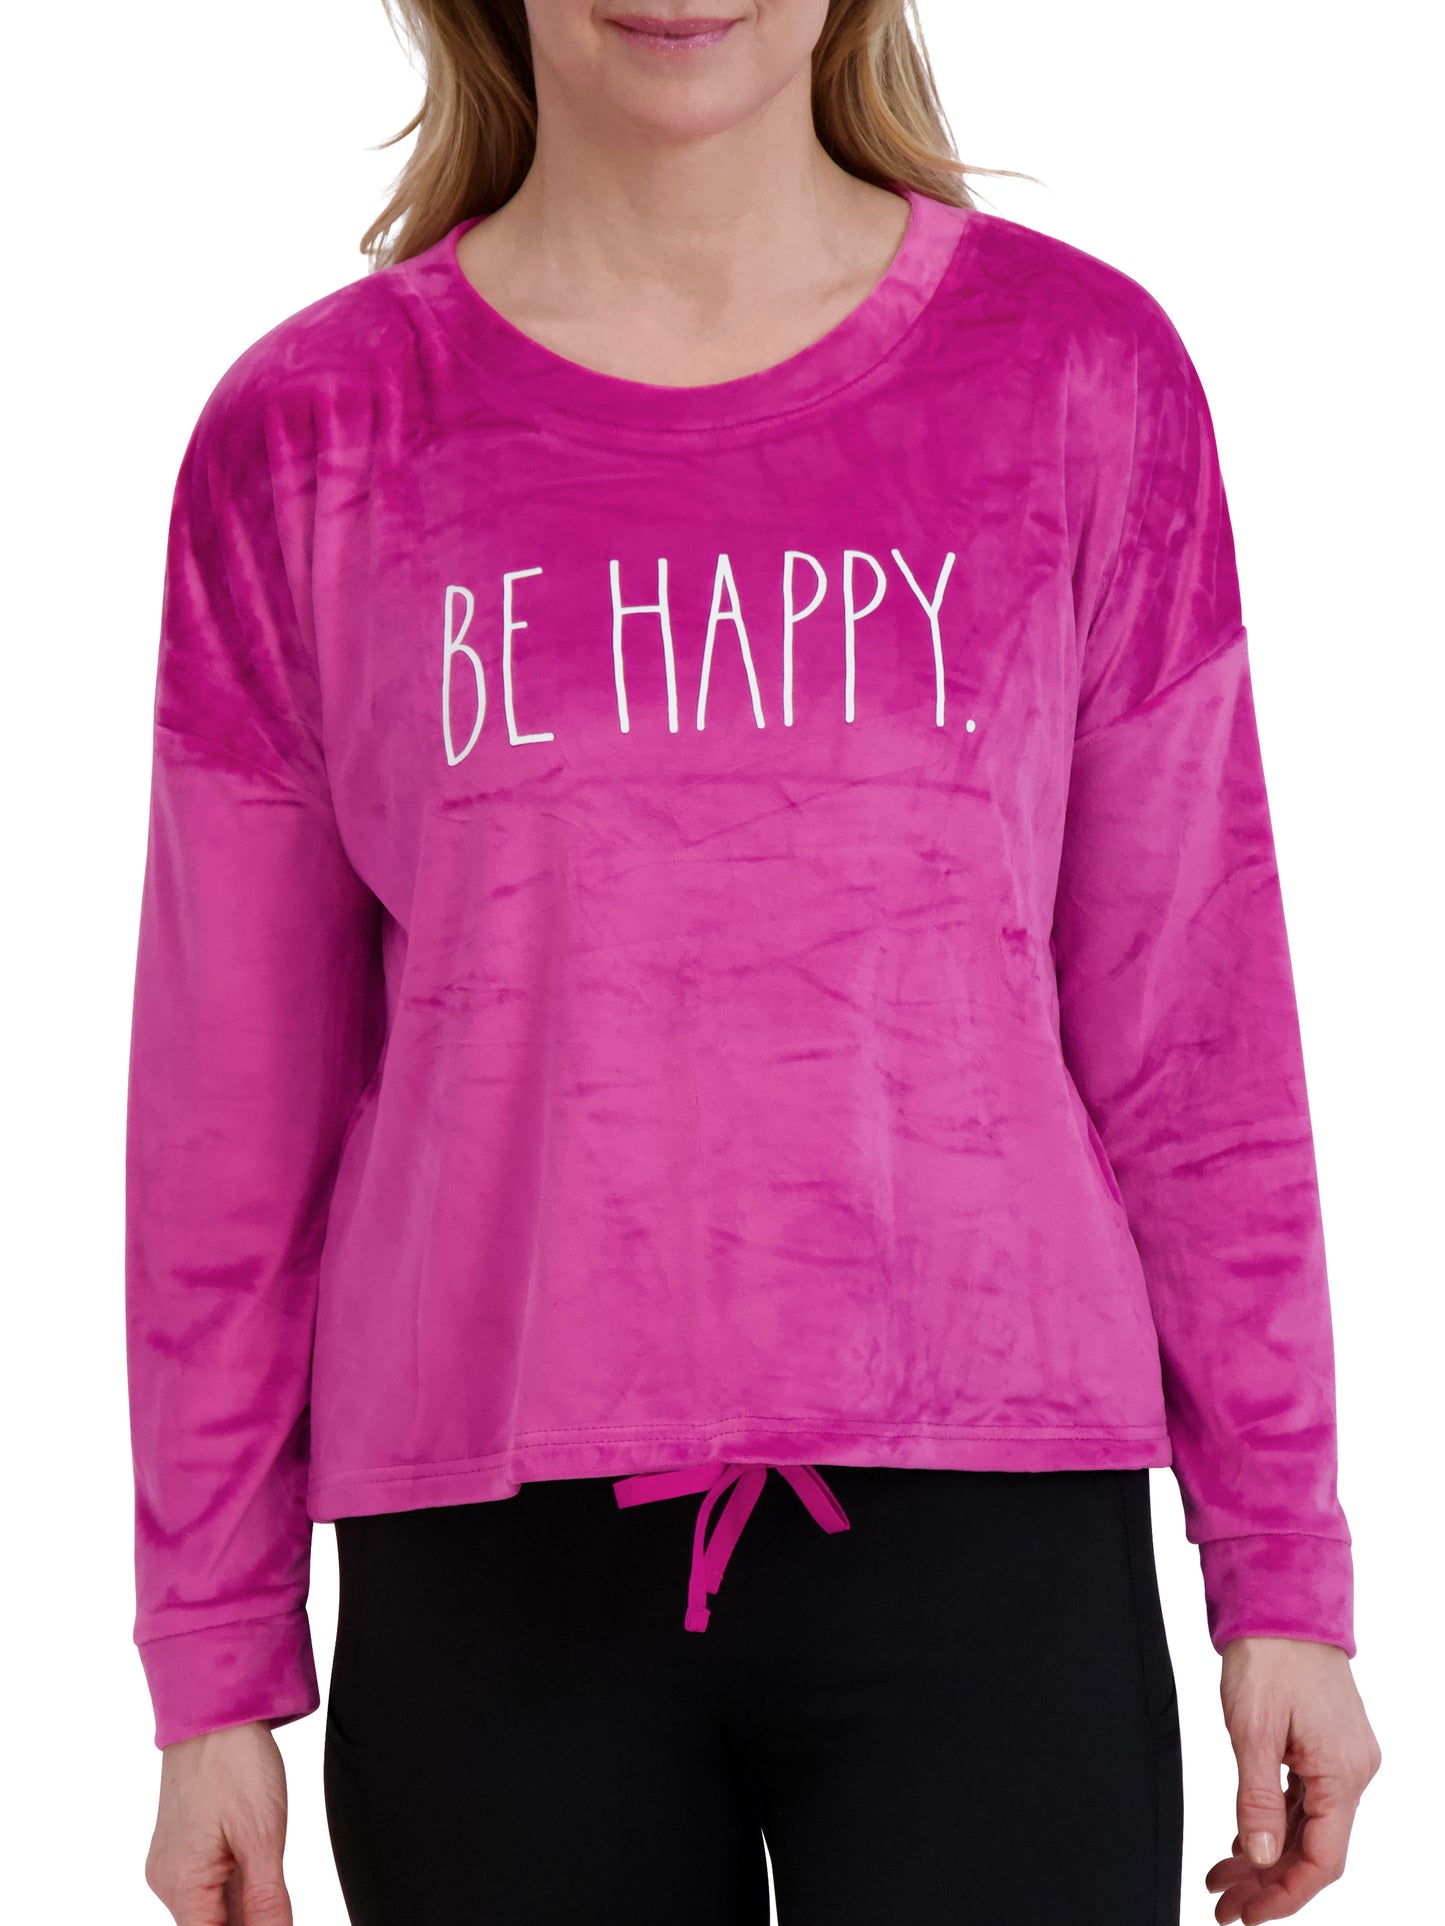 Women's "BE HAPPY" Pink Velour Drawstring Sweatshirt - Rae Dunn Wear - W Sweatshirt